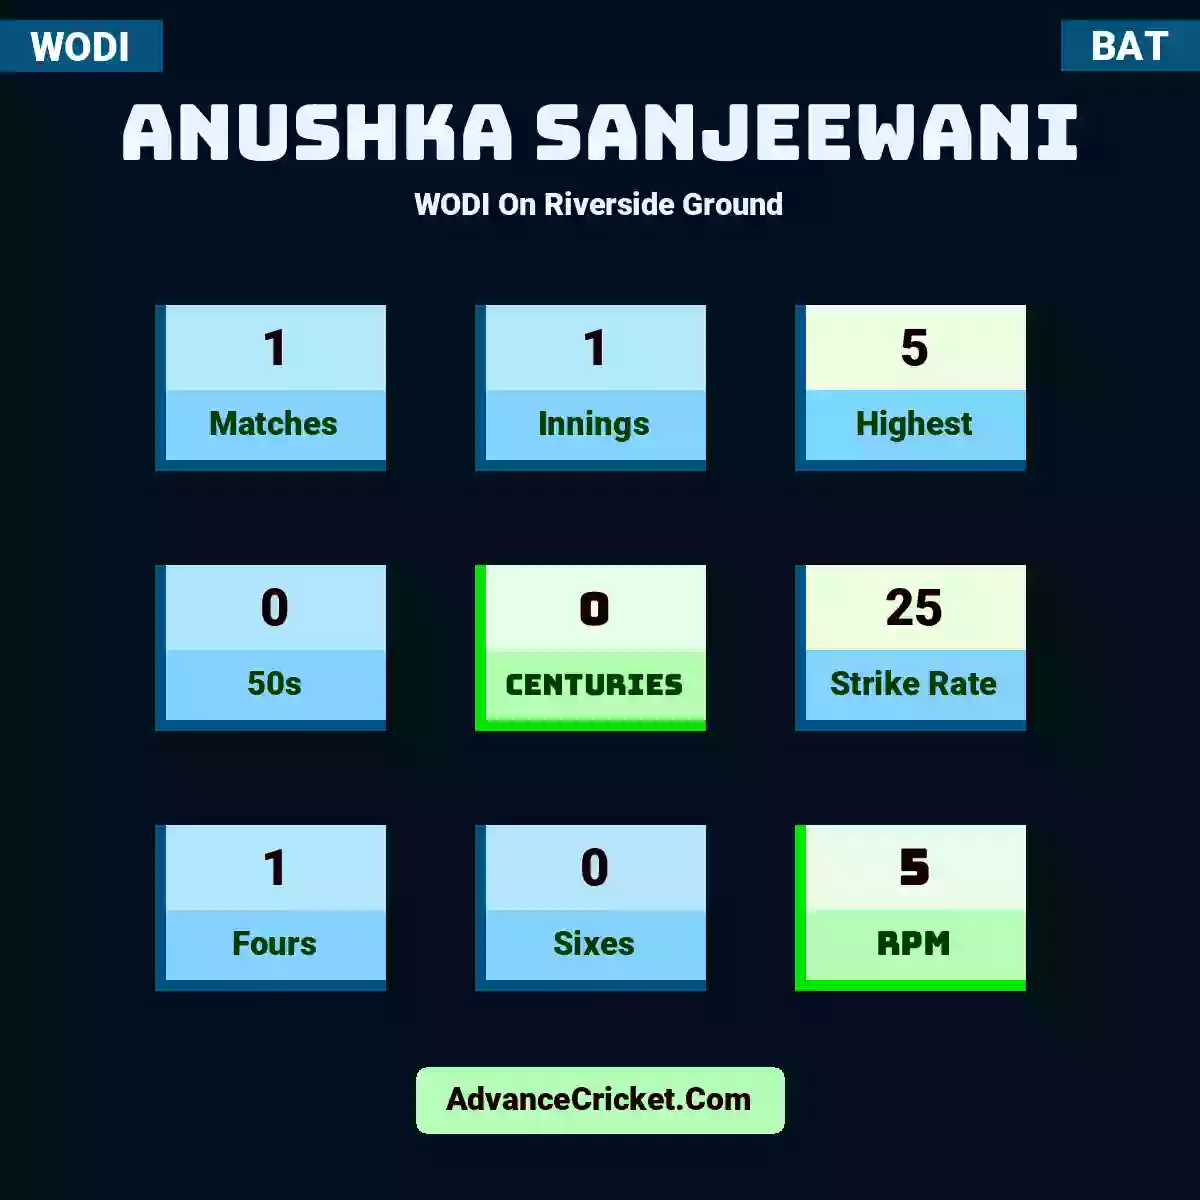 Anushka Sanjeewani WODI  On Riverside Ground, Anushka Sanjeewani played 1 matches, scored 5 runs as highest, 0 half-centuries, and 0 centuries, with a strike rate of 25. A.Sanjeewani hit 1 fours and 0 sixes, with an RPM of 5.